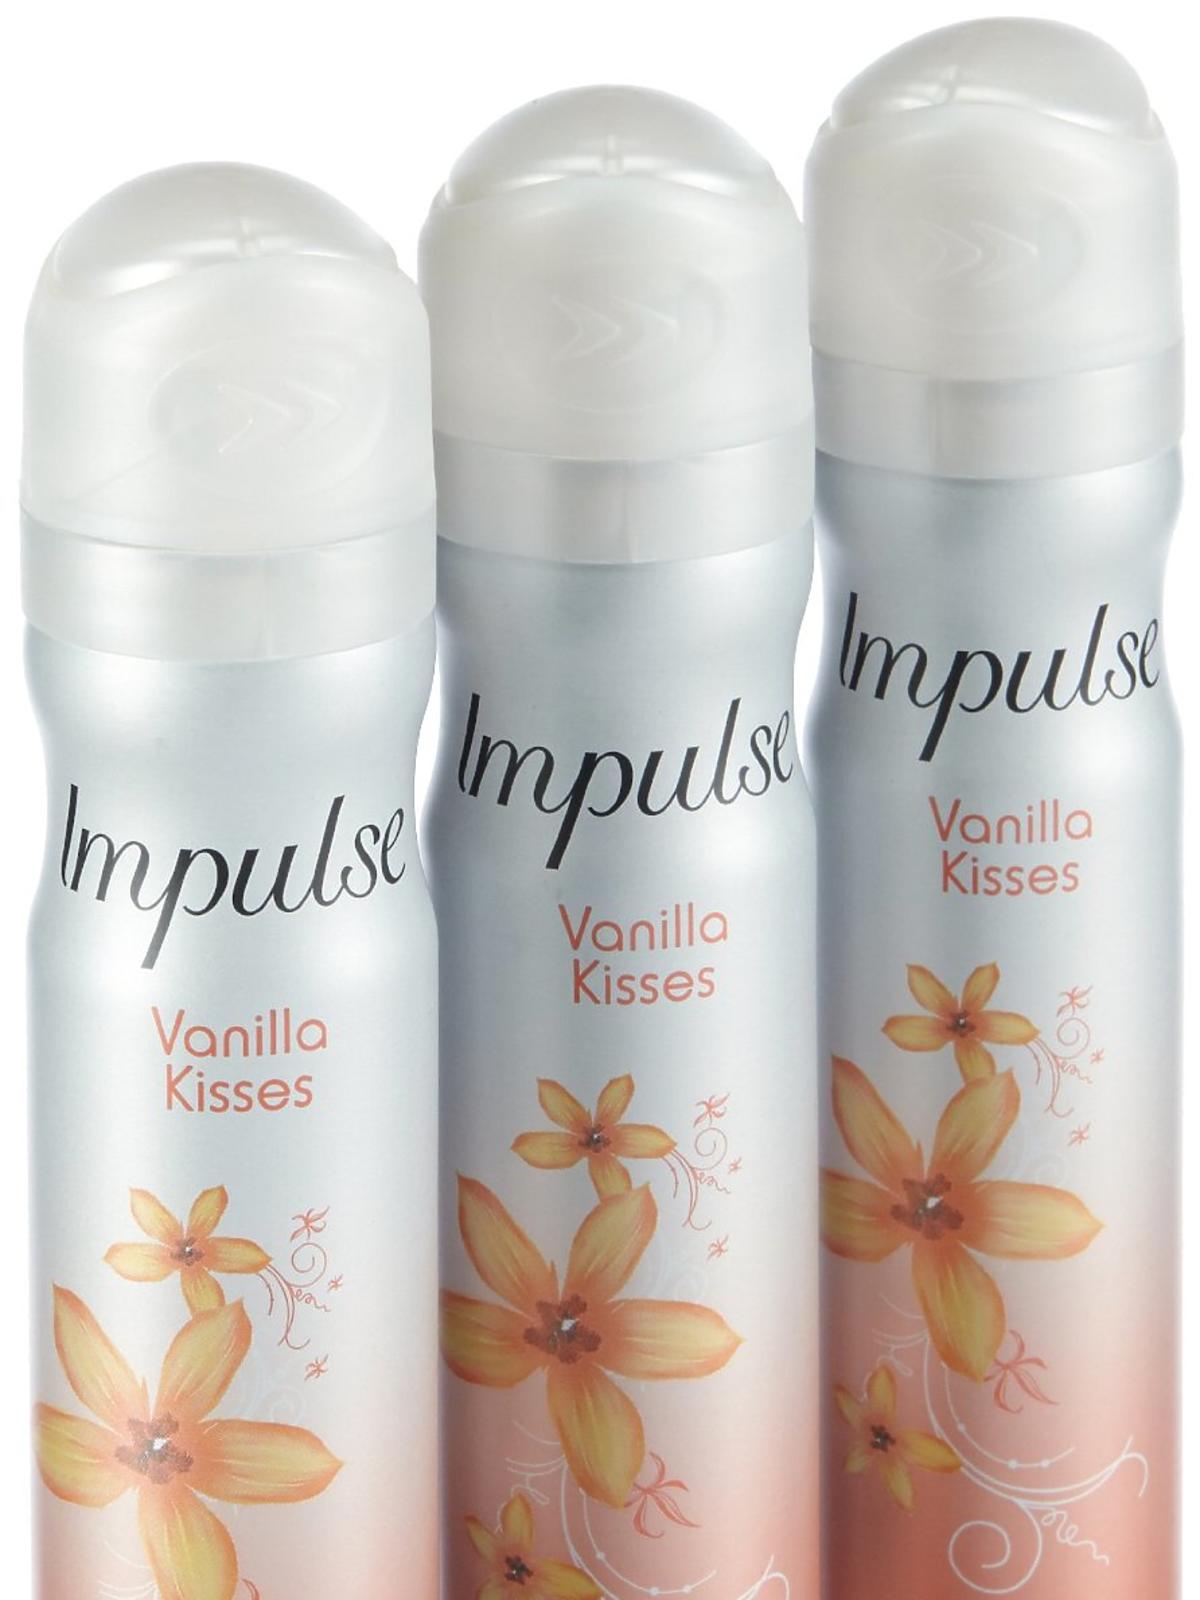 dezodorant impulse vanilla kisses